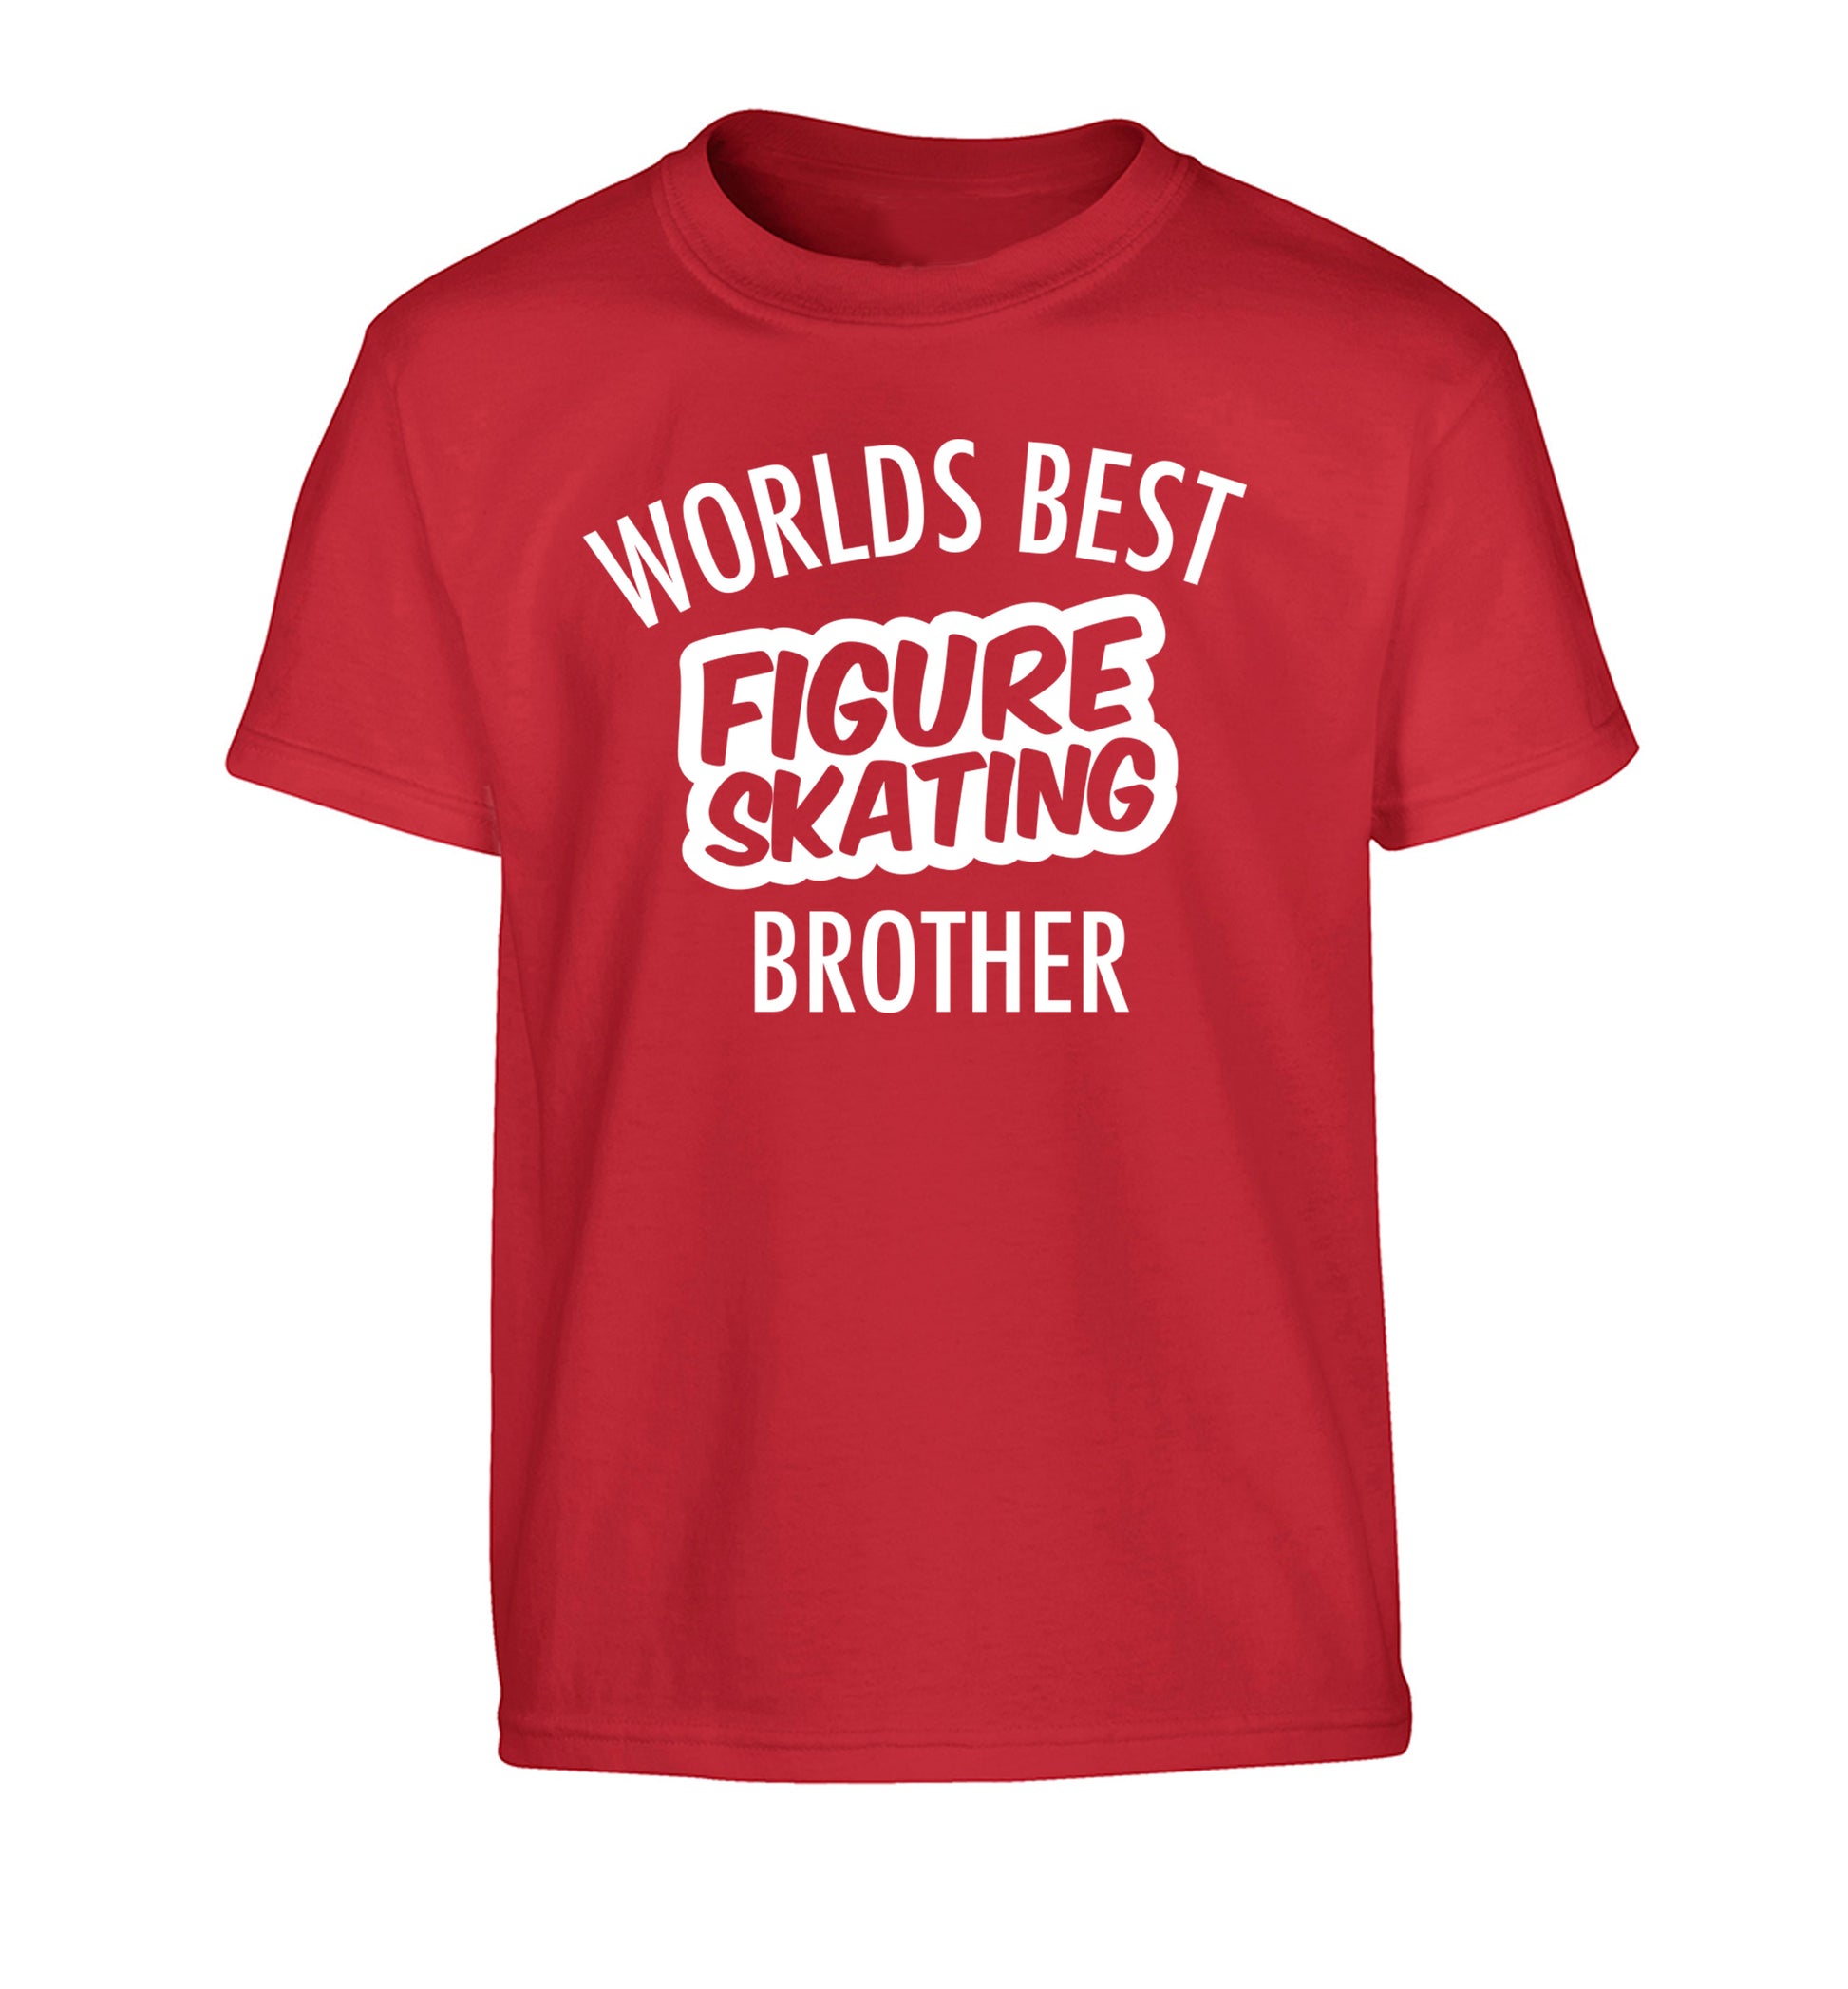 Worlds best figure skating brother Children's red Tshirt 12-14 Years